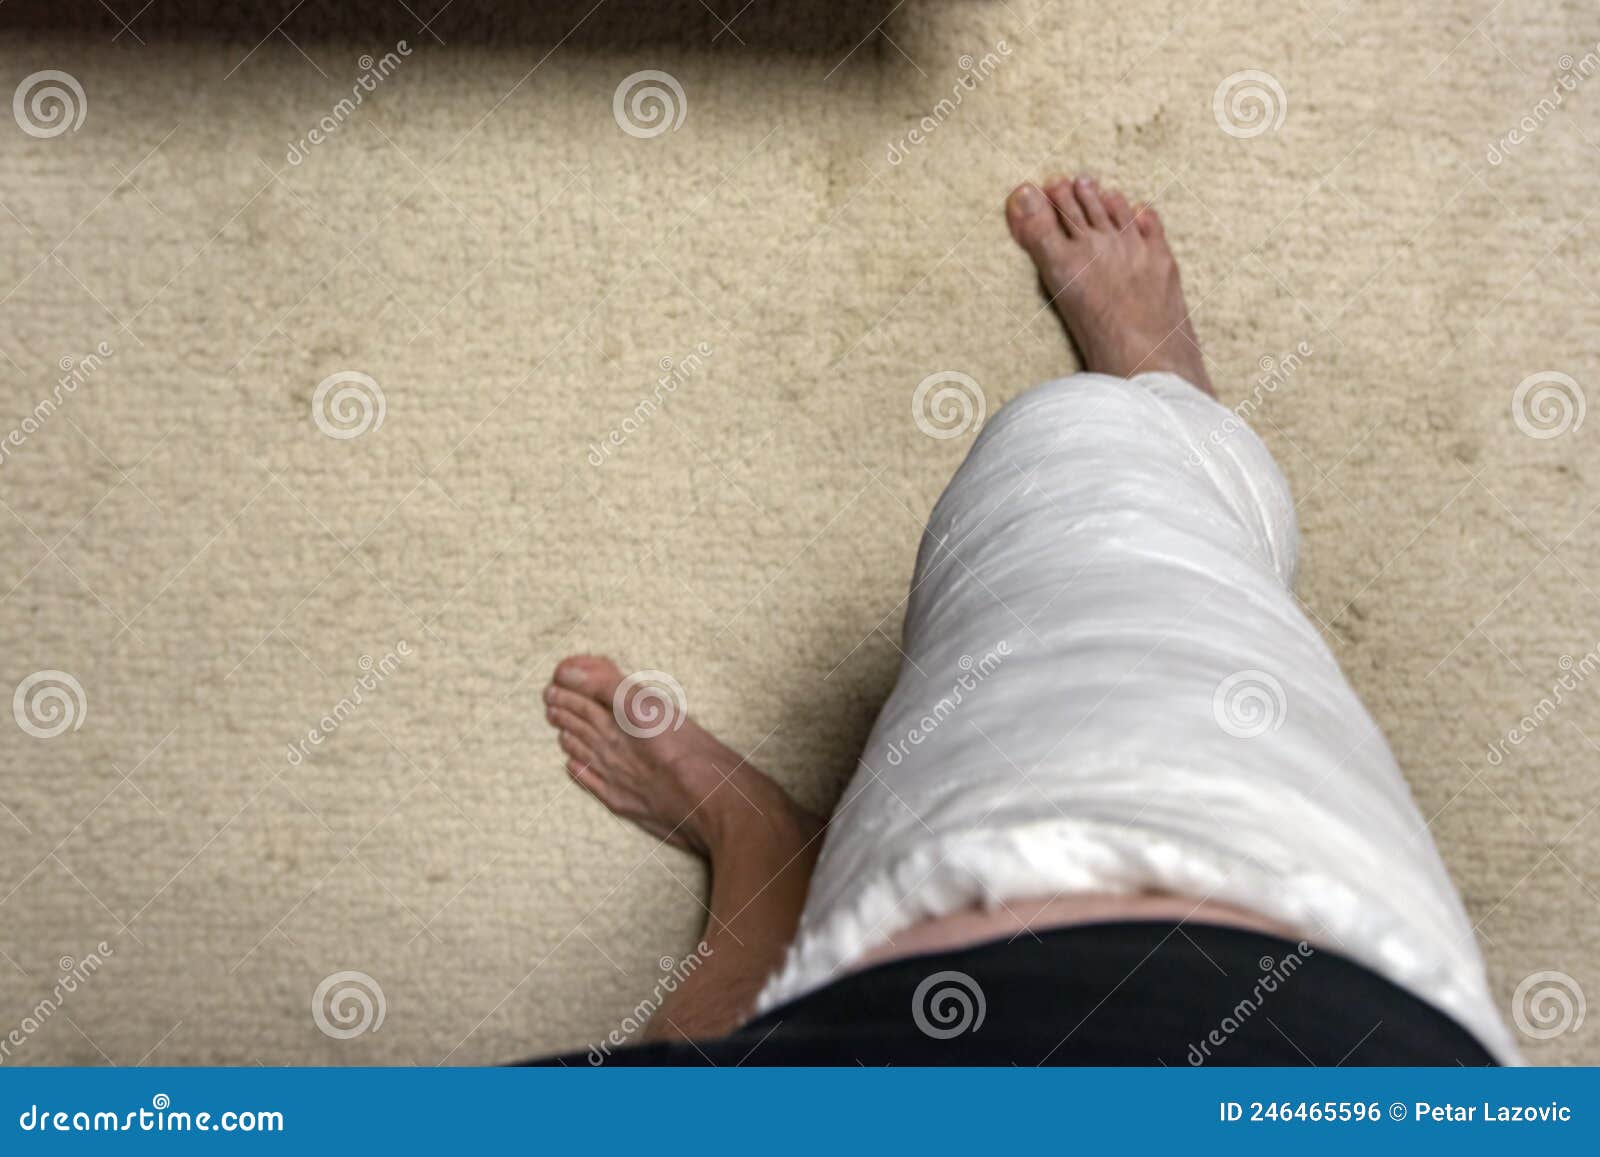 Man Broken Leg Using Crutches Walking Blue Carpet Stock Photo by ©AndreyPopov 180435692